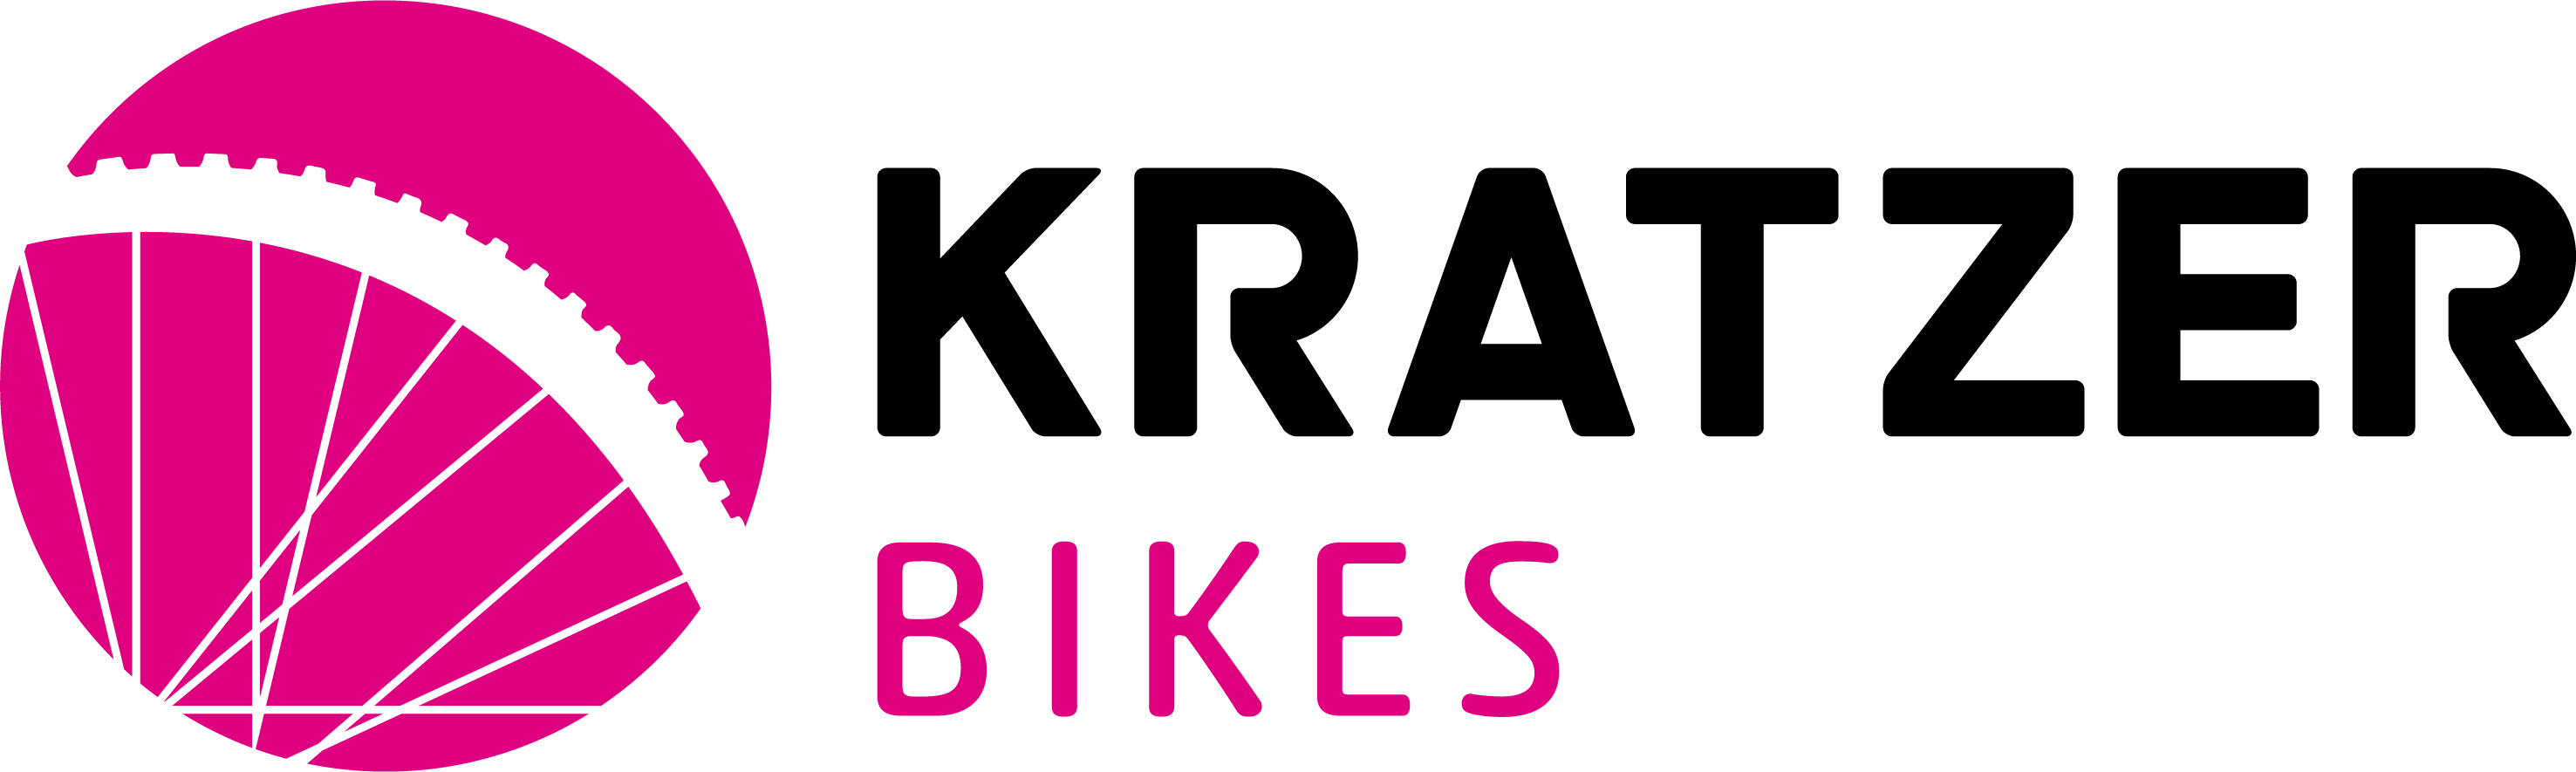 kratzer_bikes_pfaffenhofen_fahrrad-1